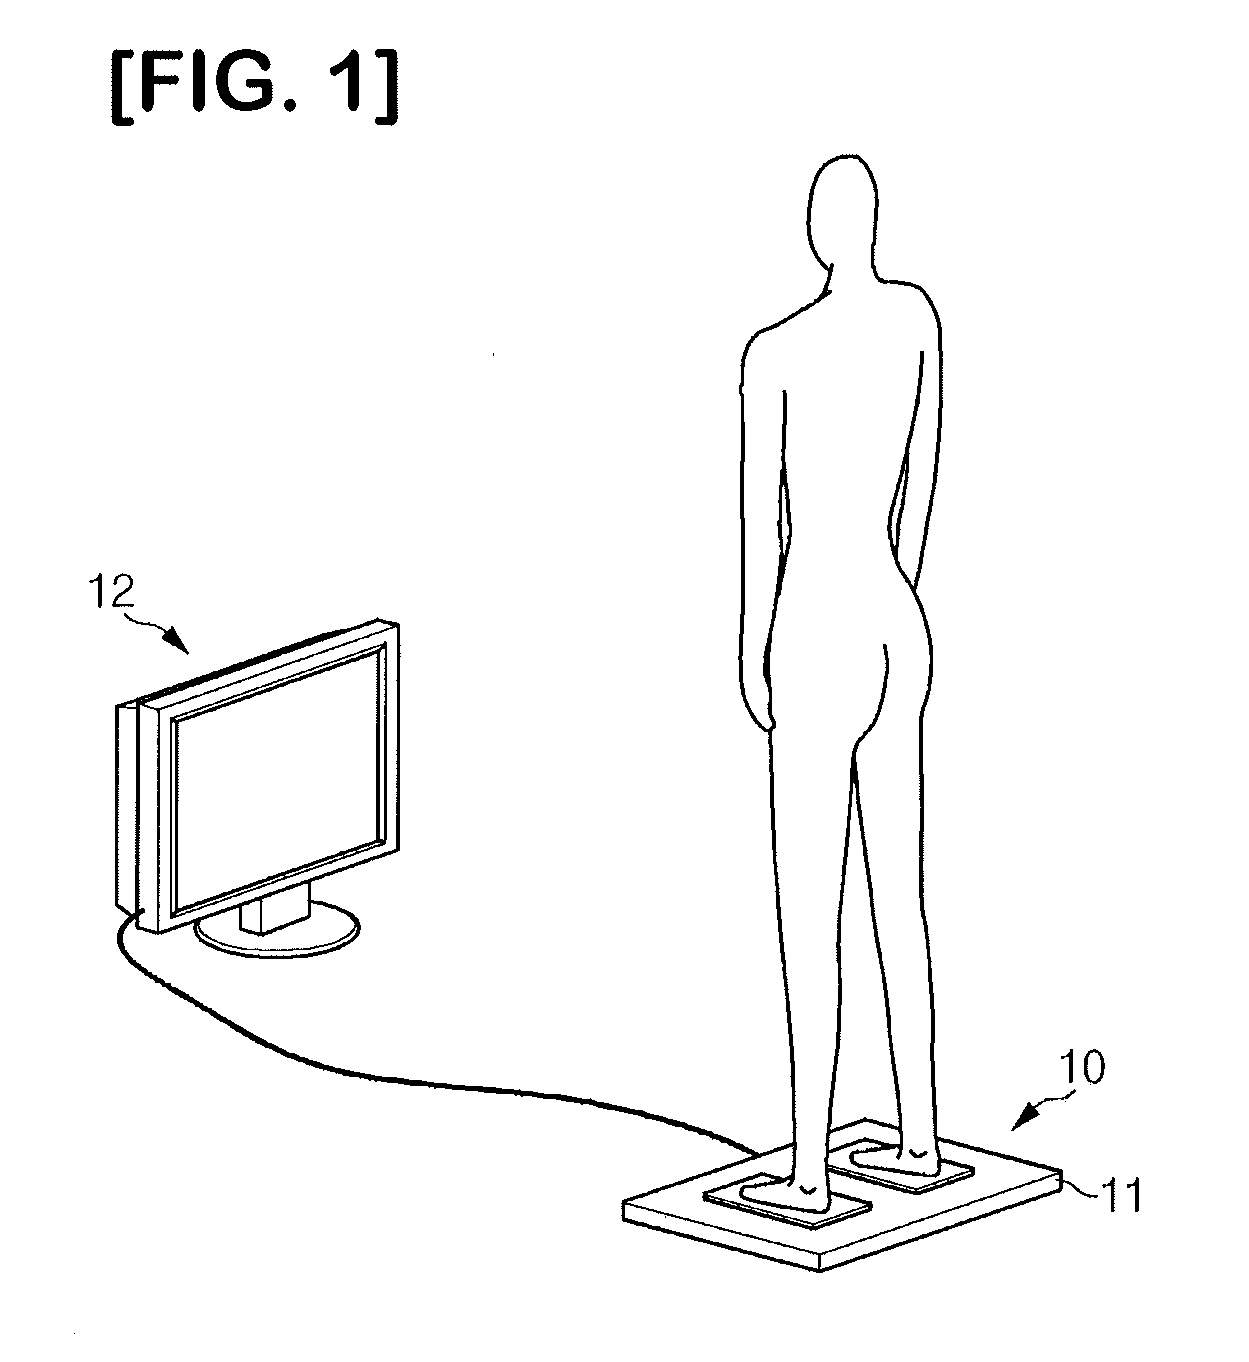 Rehabilitation apparatus using game device